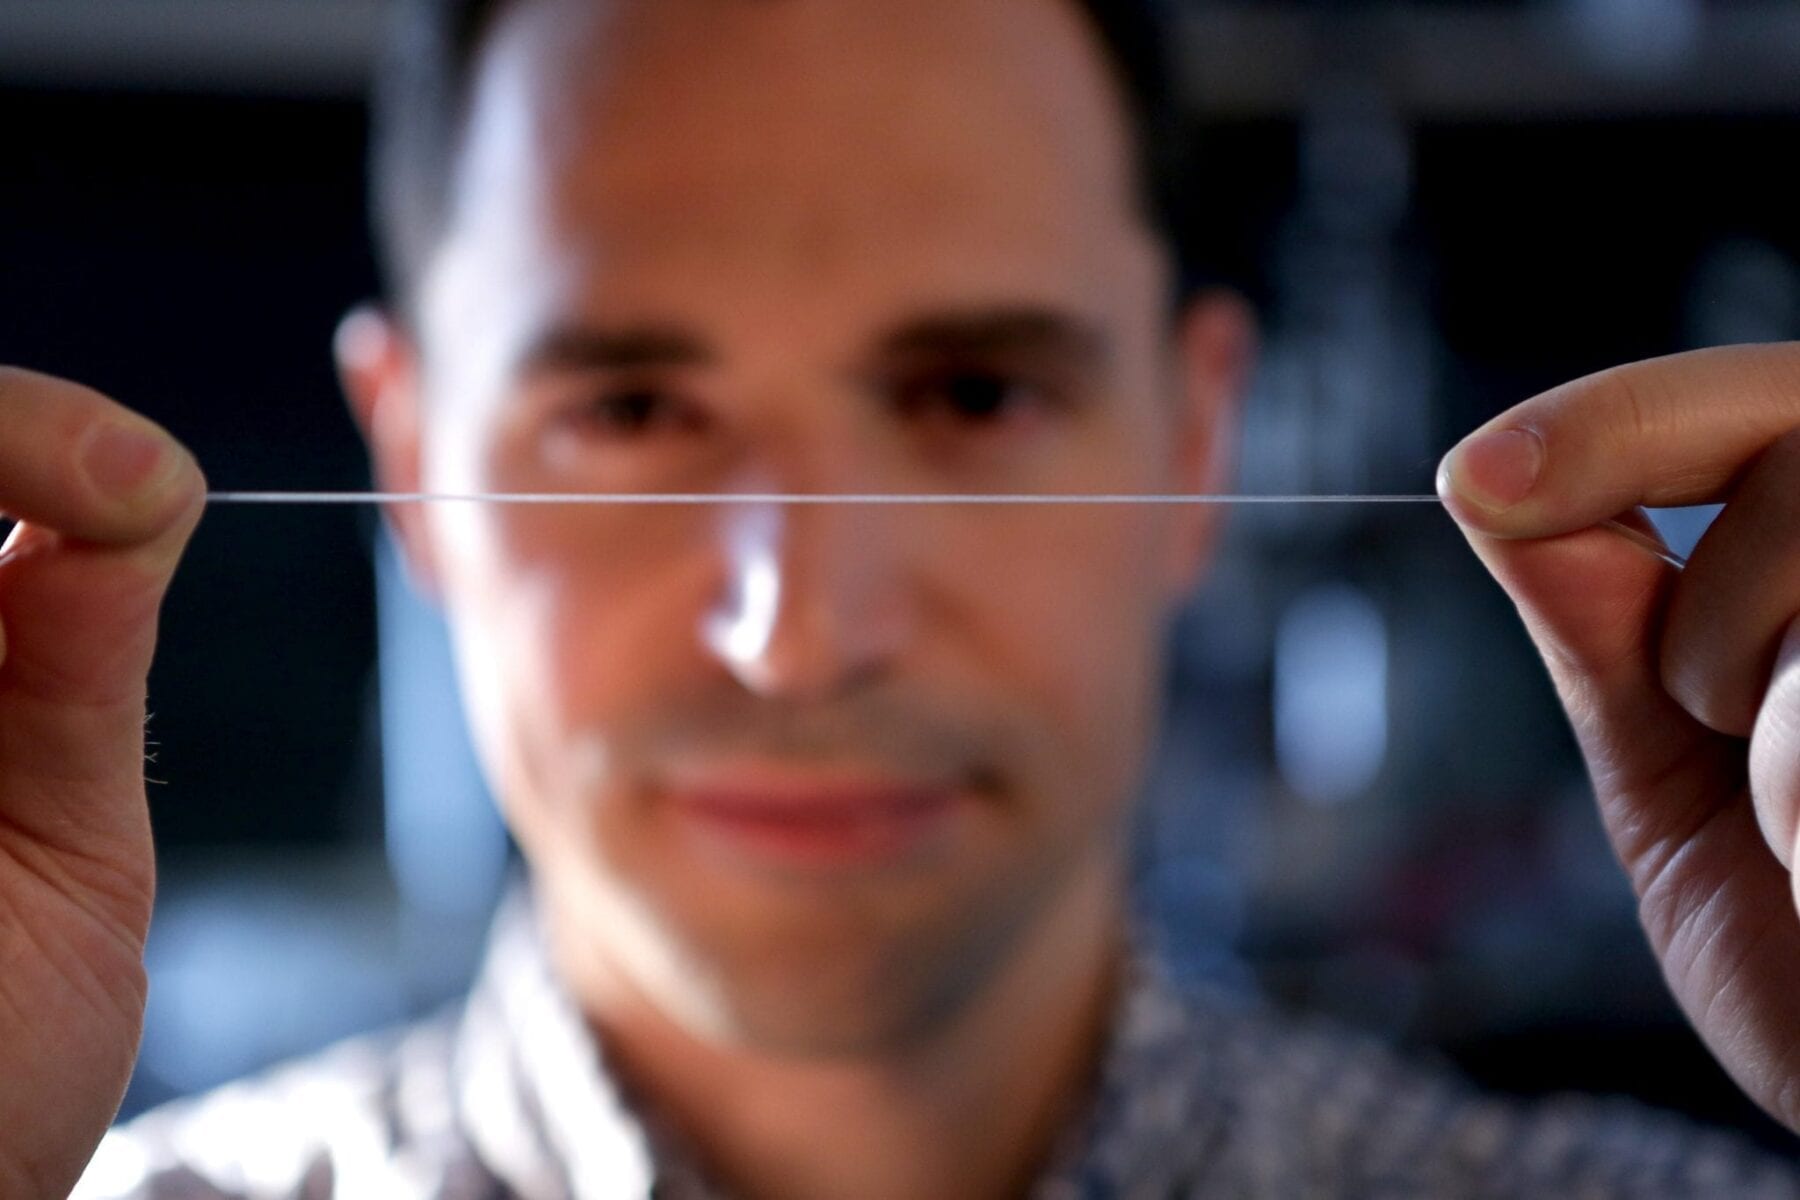 New elastic smart fiber set to revolutionize smart clothing, prostheses and artificial nerves for robots